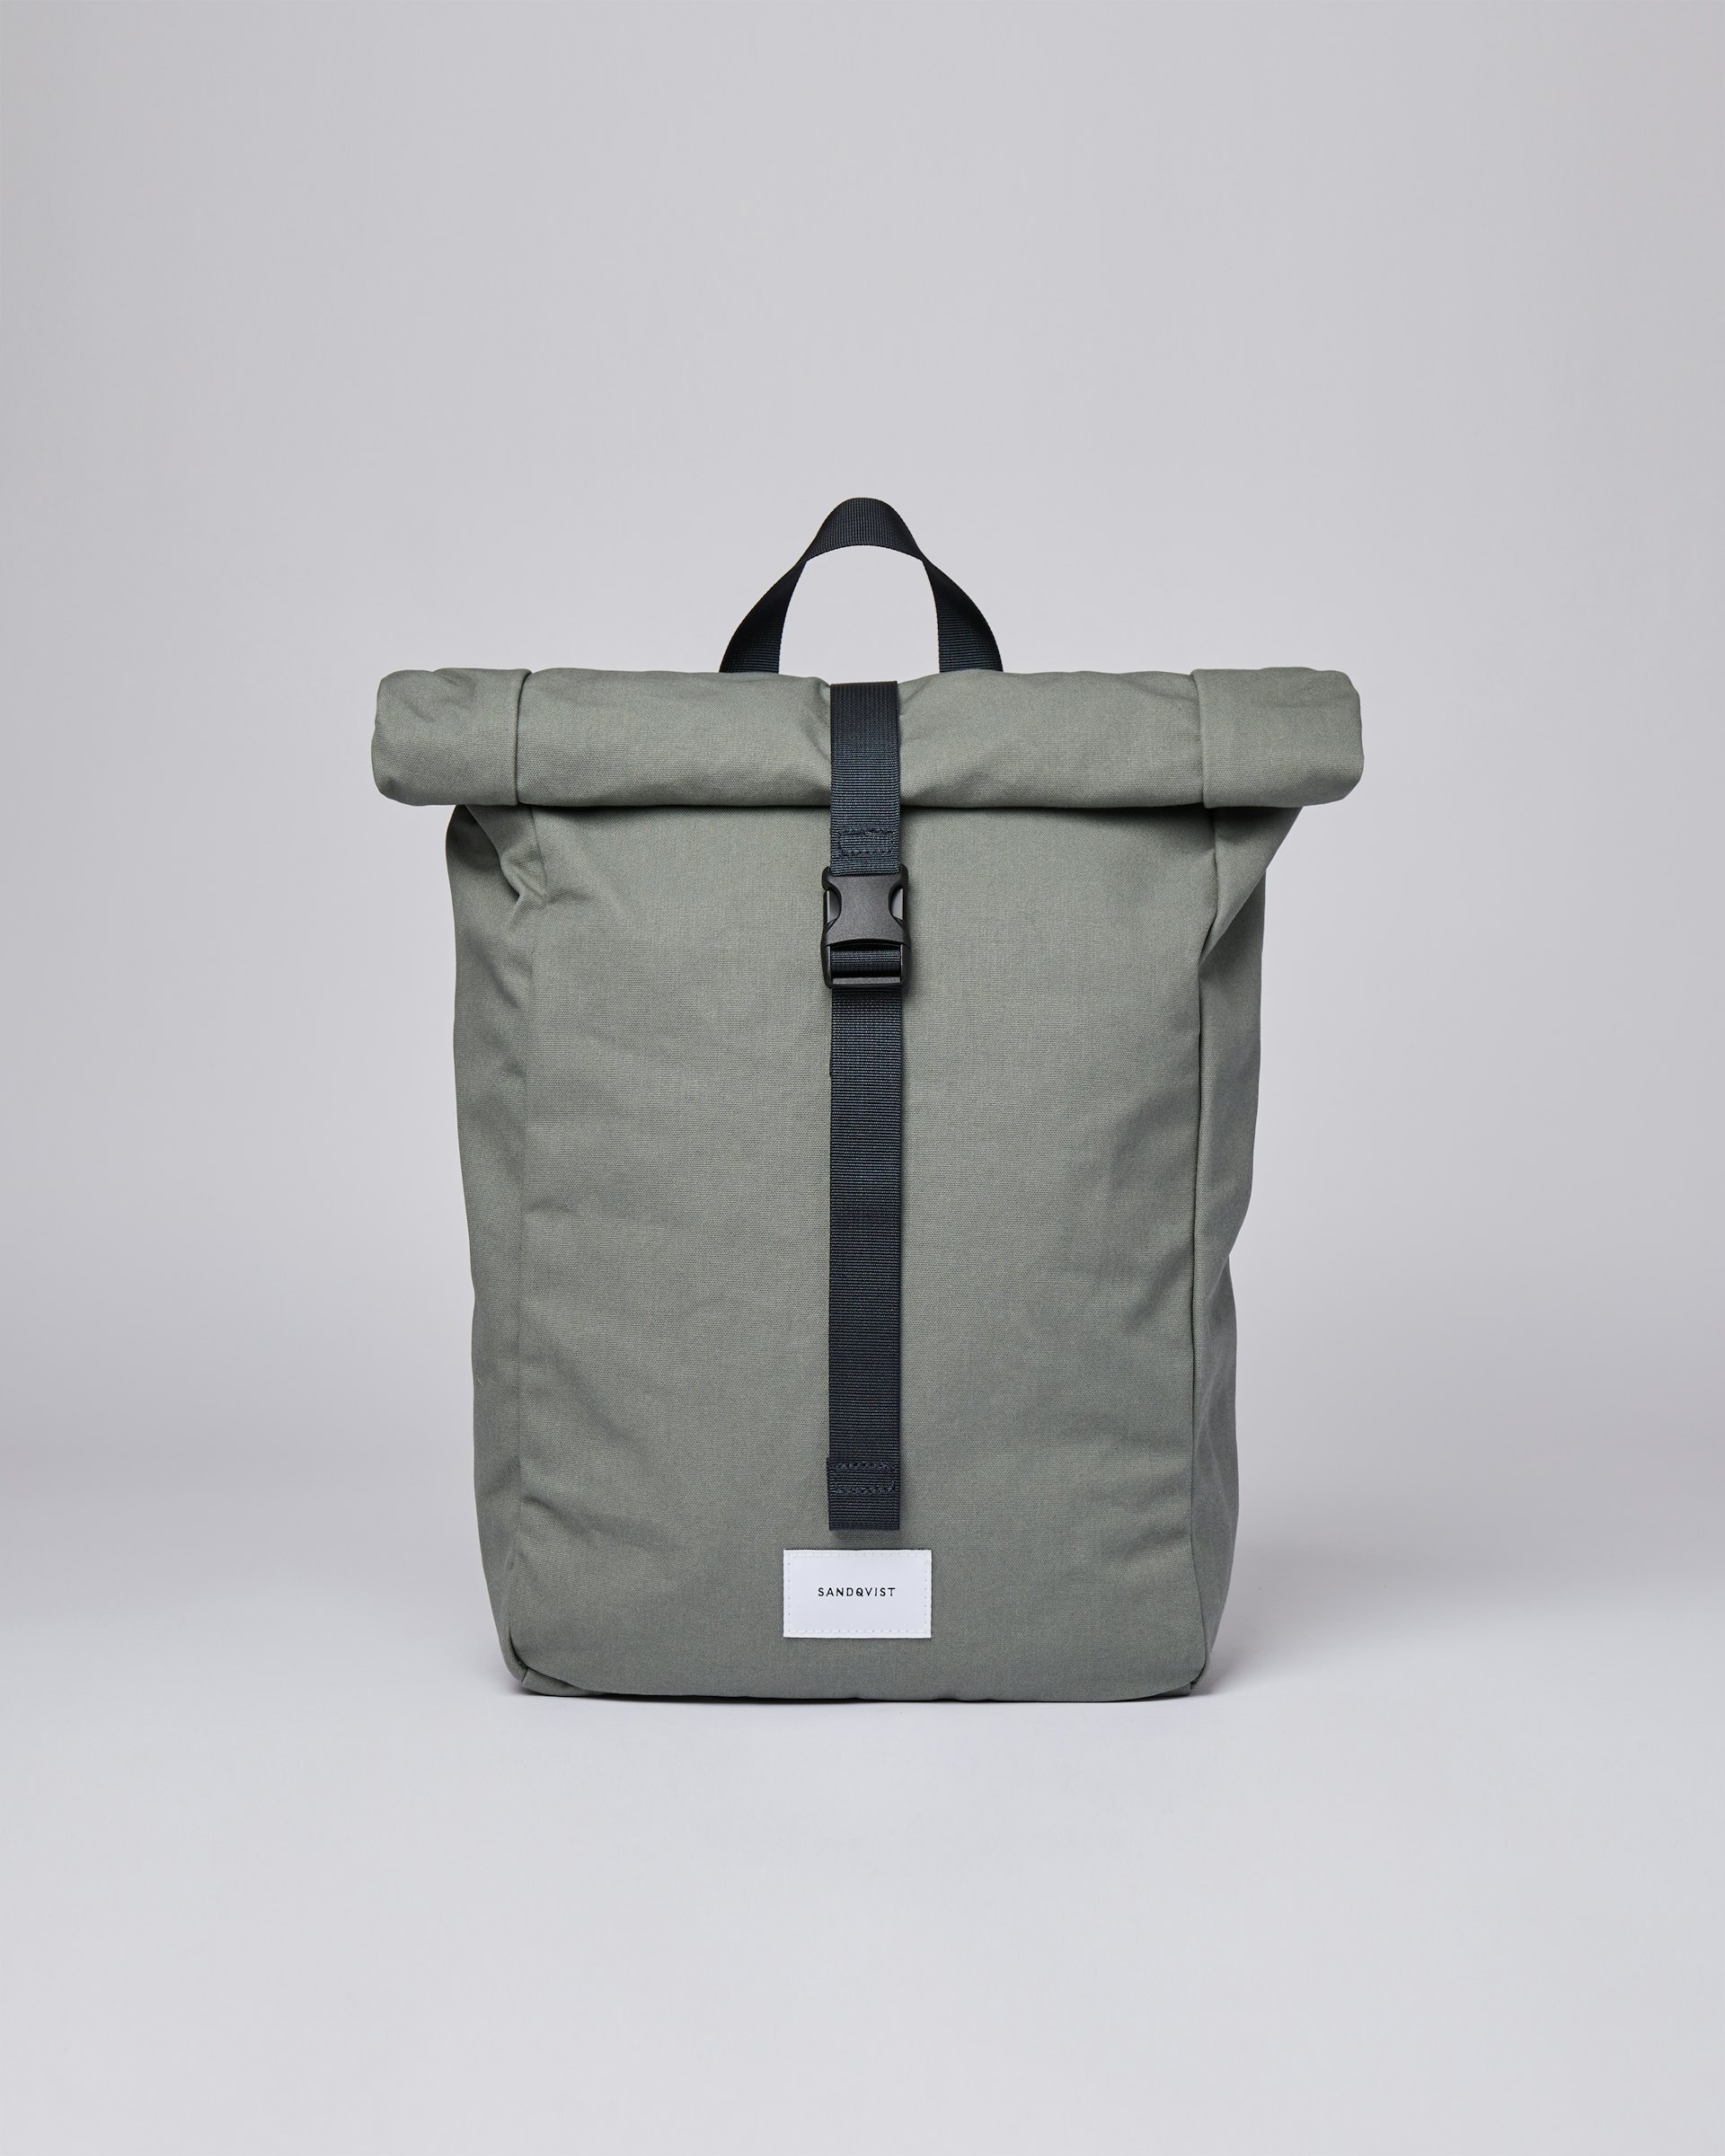 Kaj gehört zur kategorie Backpacks und ist farbig dusty green